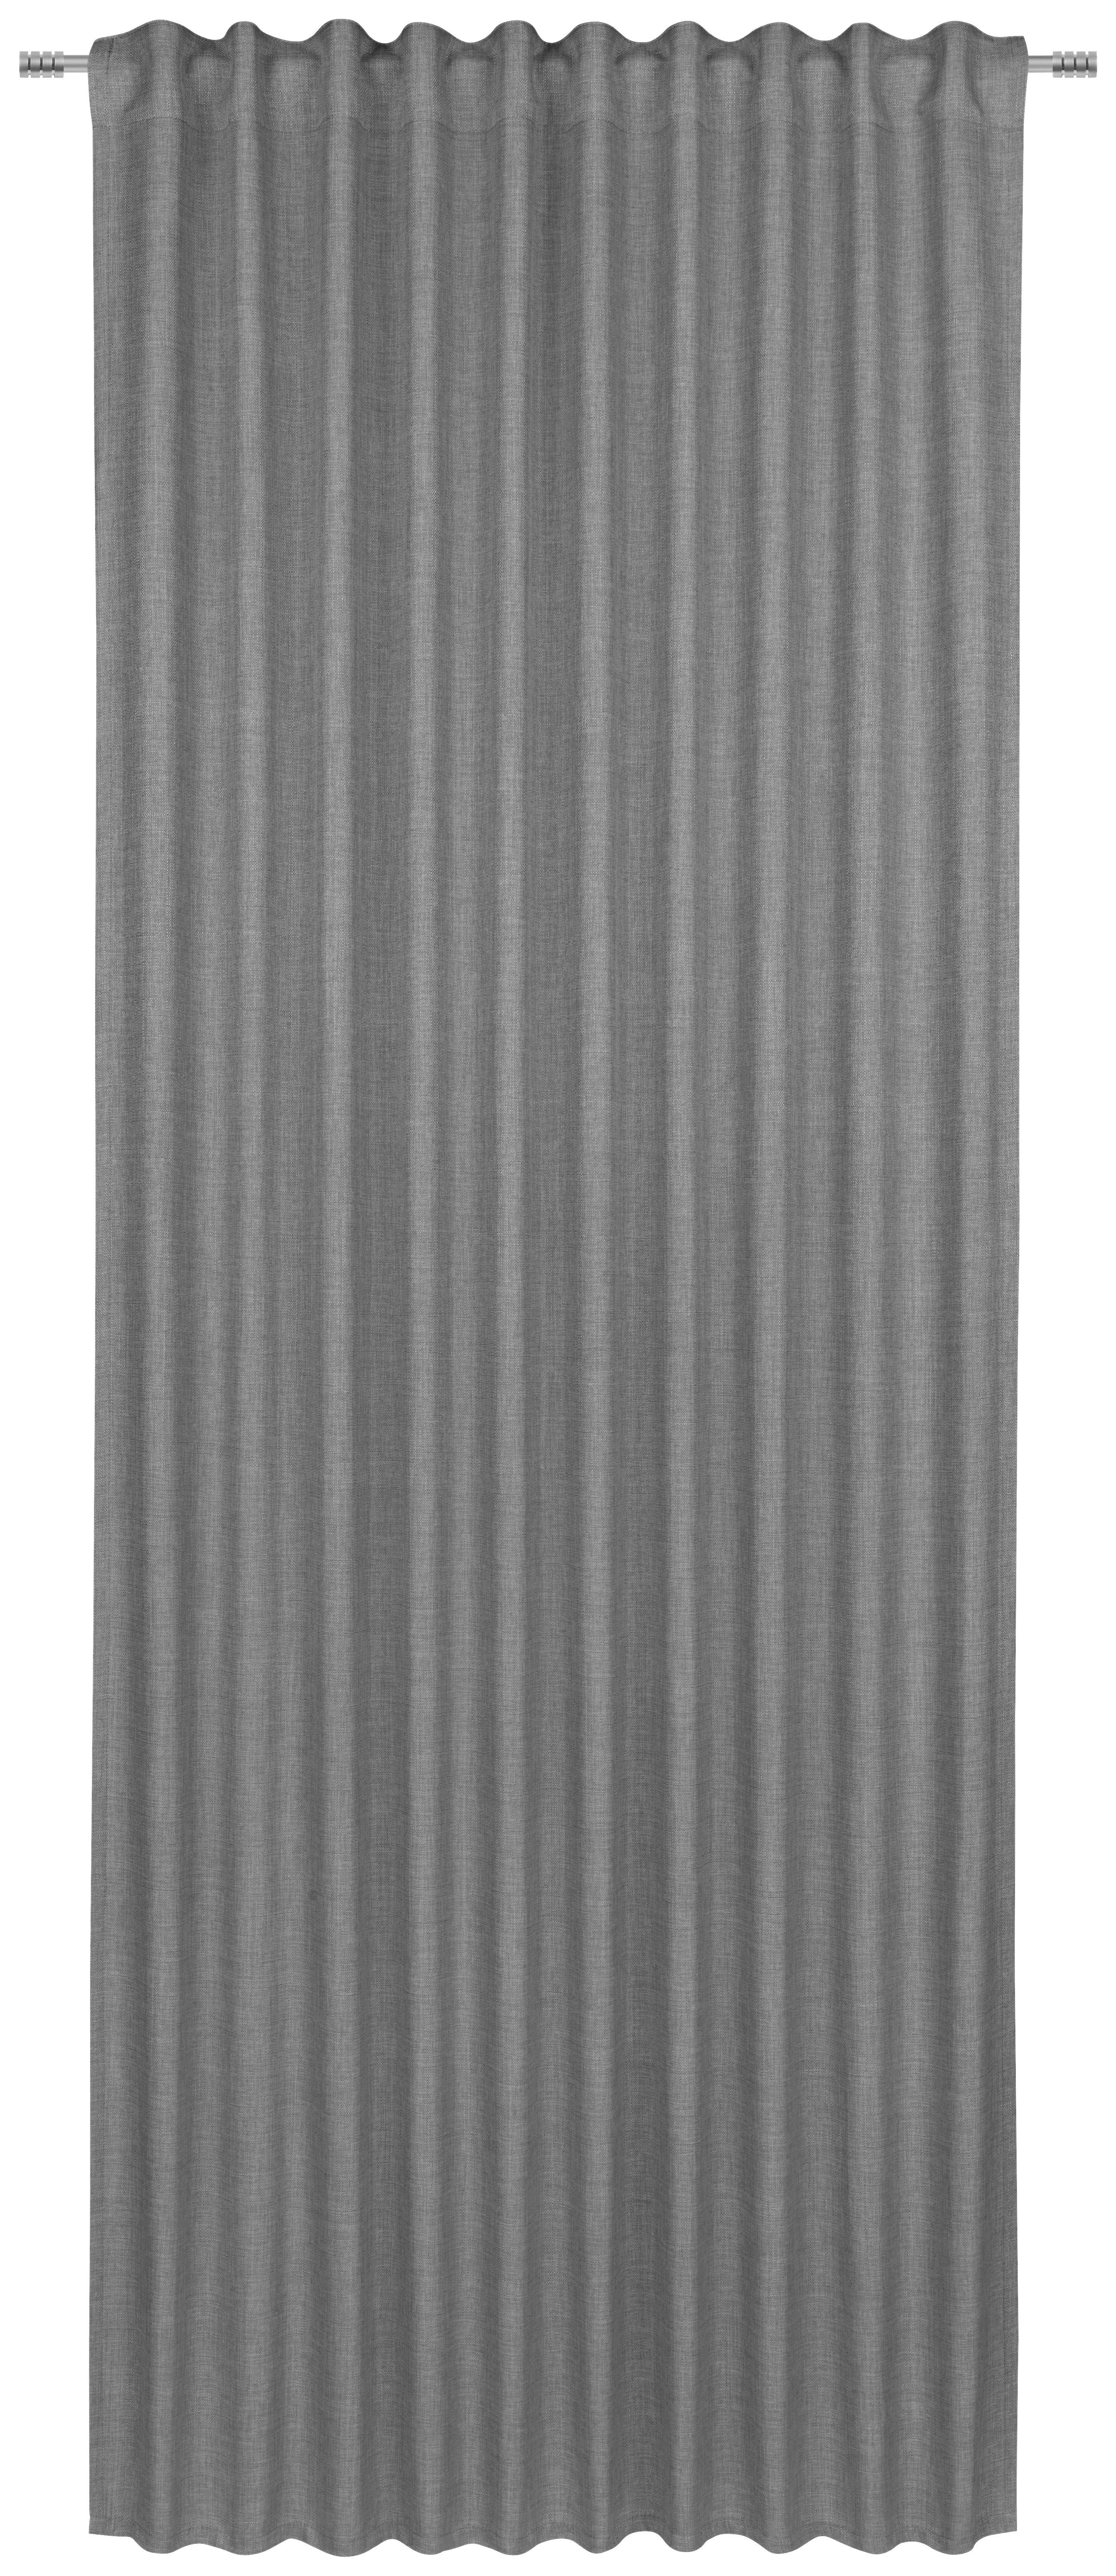 FERTIGVORHANG blickdicht 140/245 cm   - Grau, Basics, Textil (140/245cm) - Boxxx